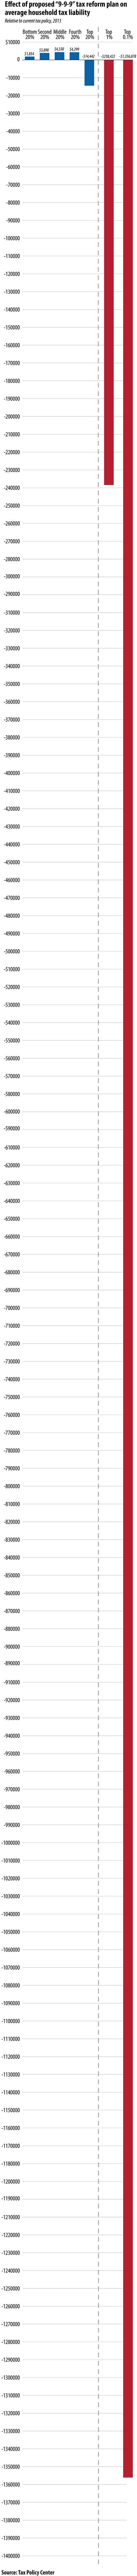 For a flat tax, that's a pretty tall graph